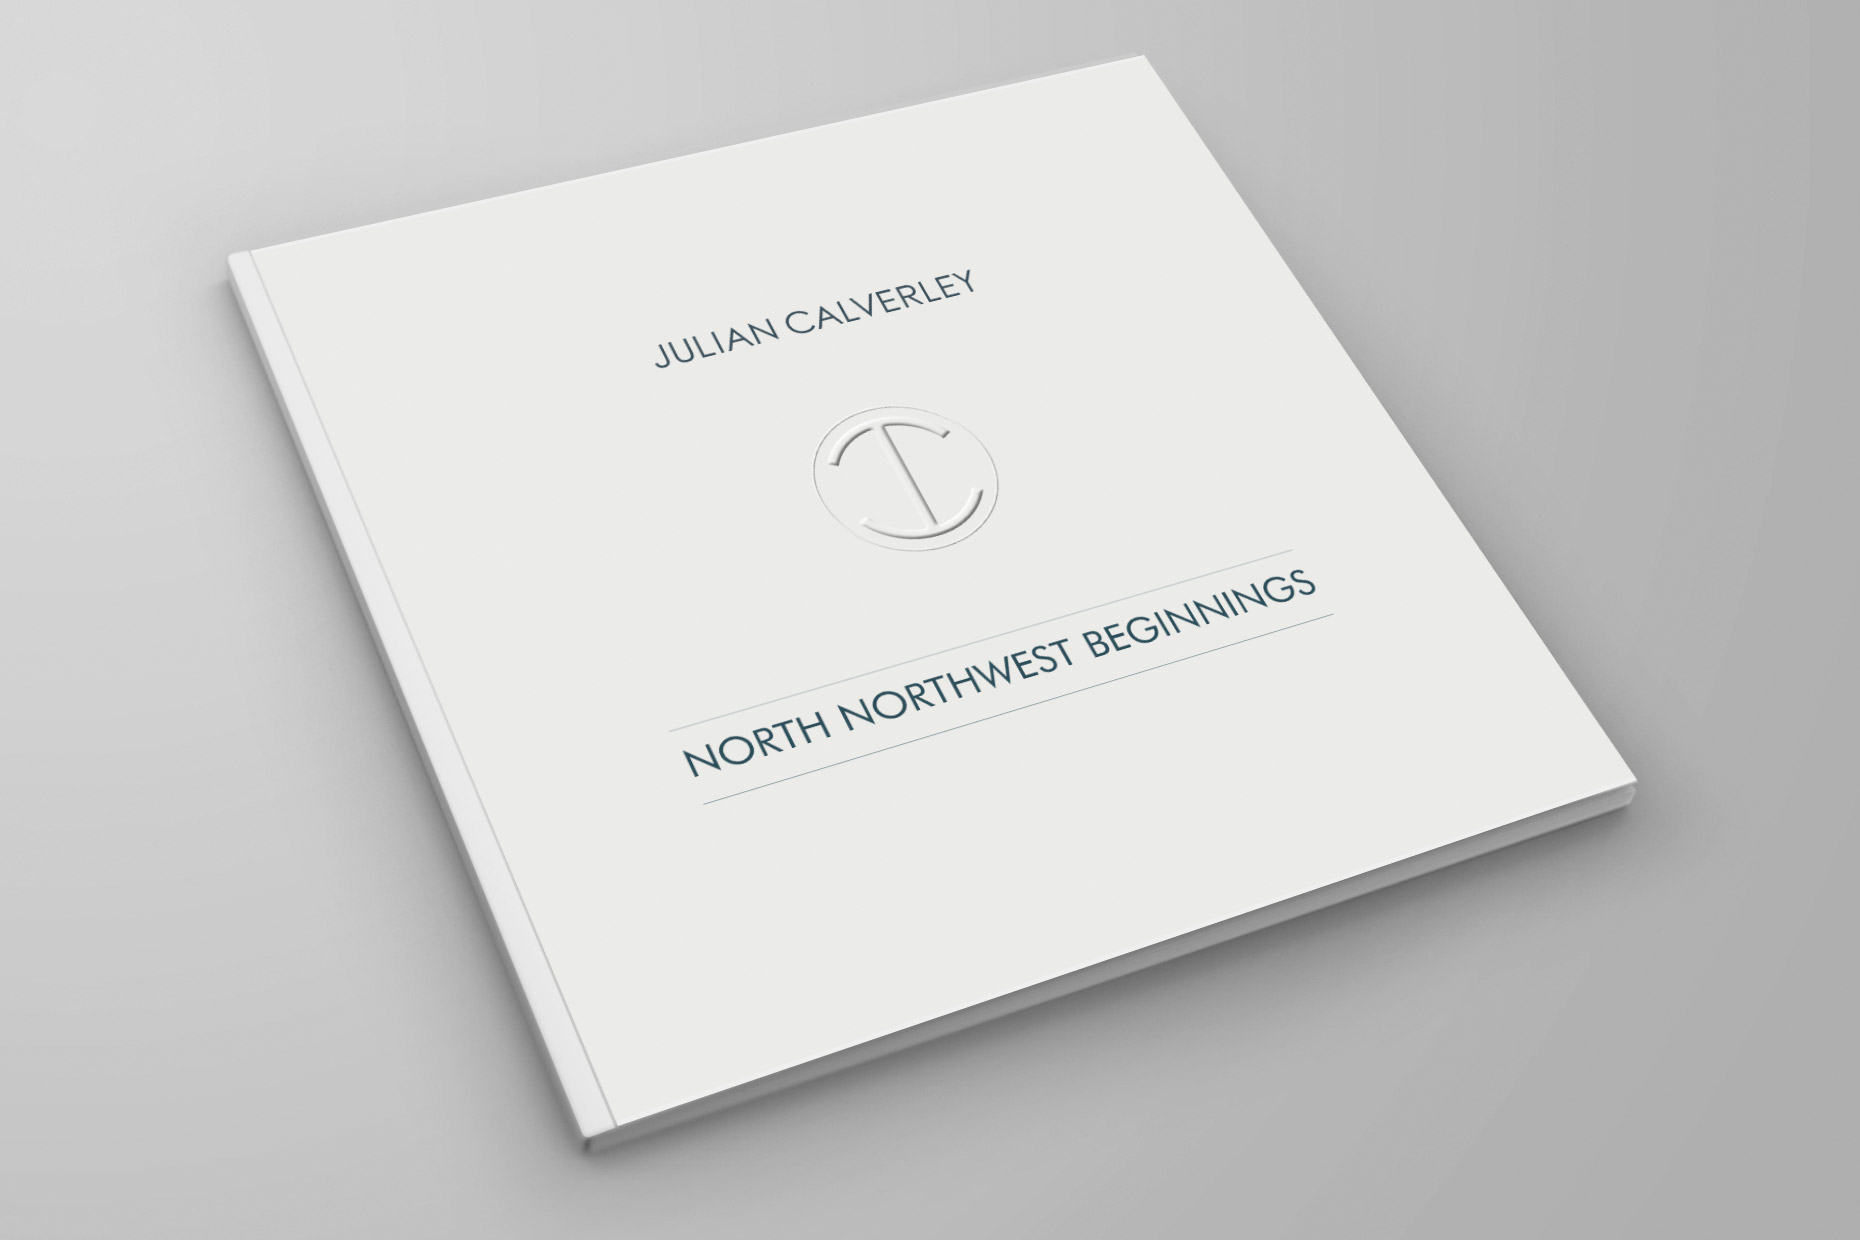 Graphic design, brochure design, logo design - Julian Calverley, Hertfordshire